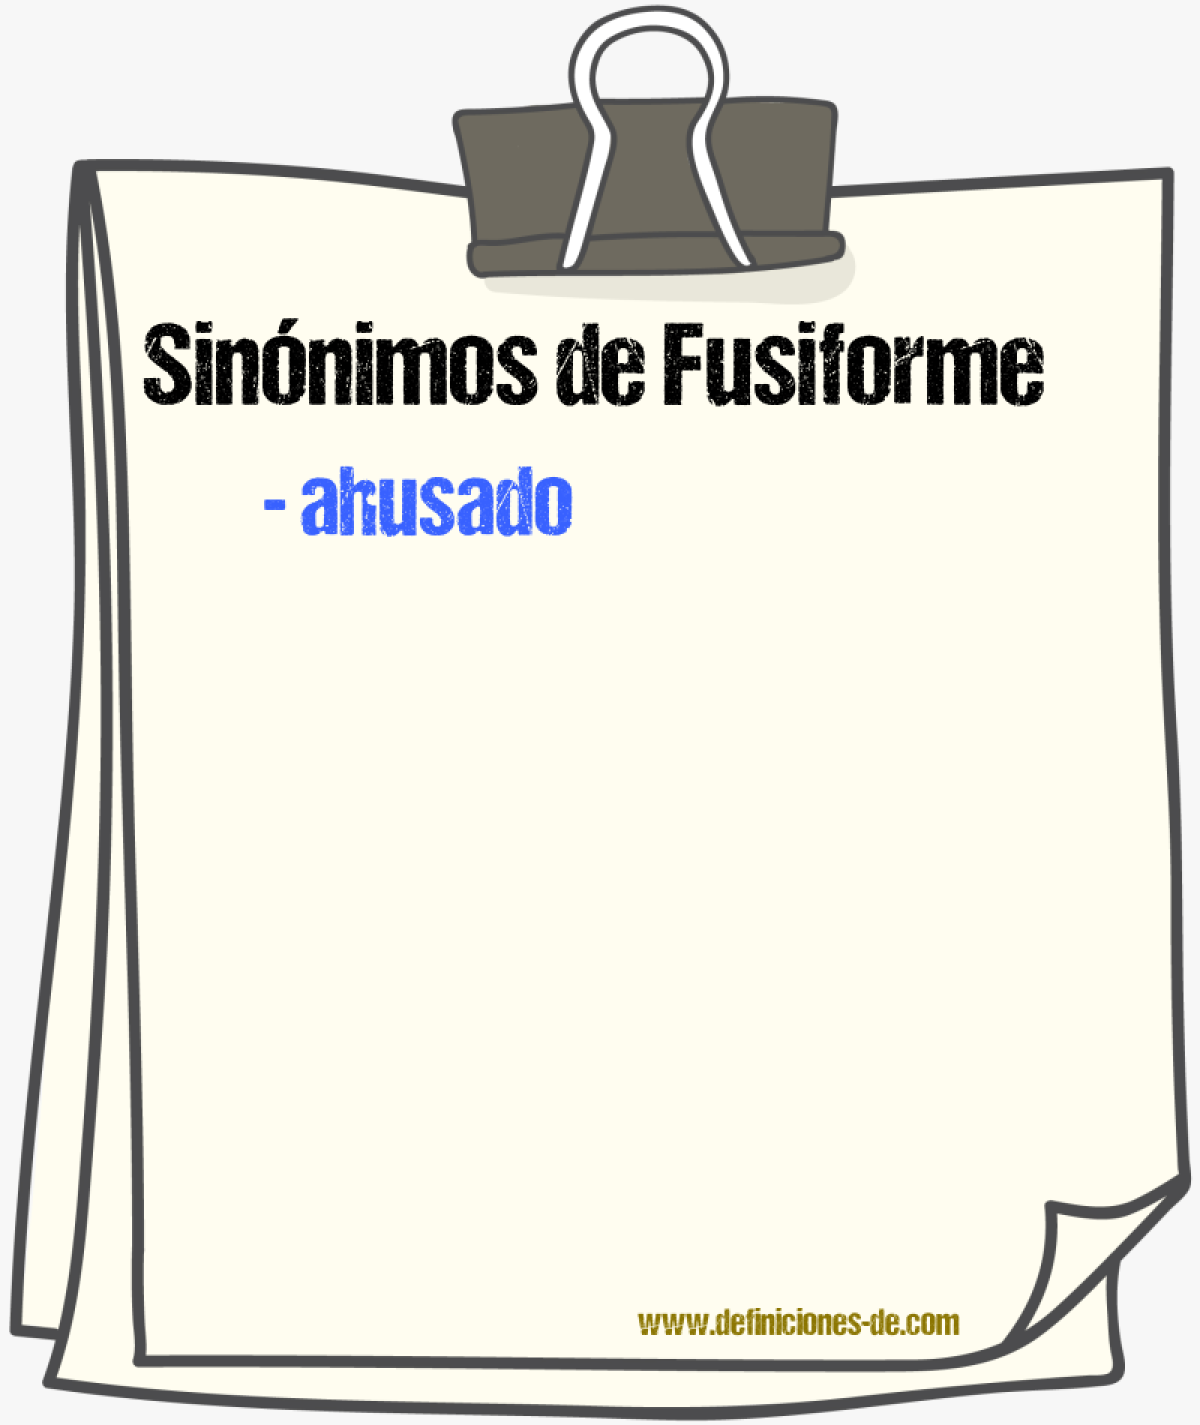 Sinnimos de fusiforme